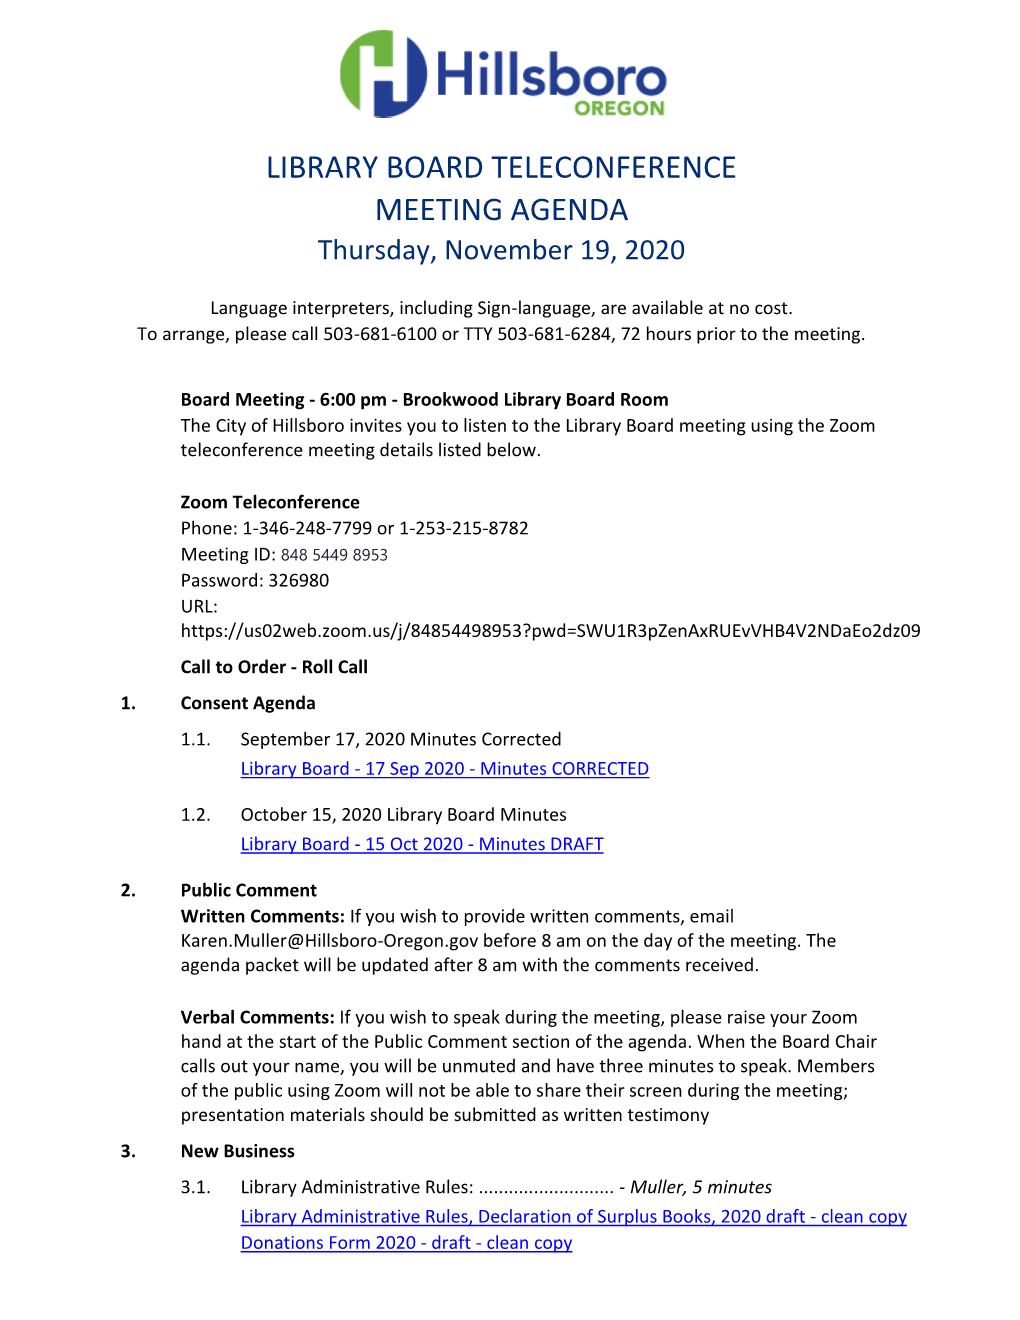 LIBRARY BOARD TELECONFERENCE MEETING AGENDA Thursday, November 19, 2020